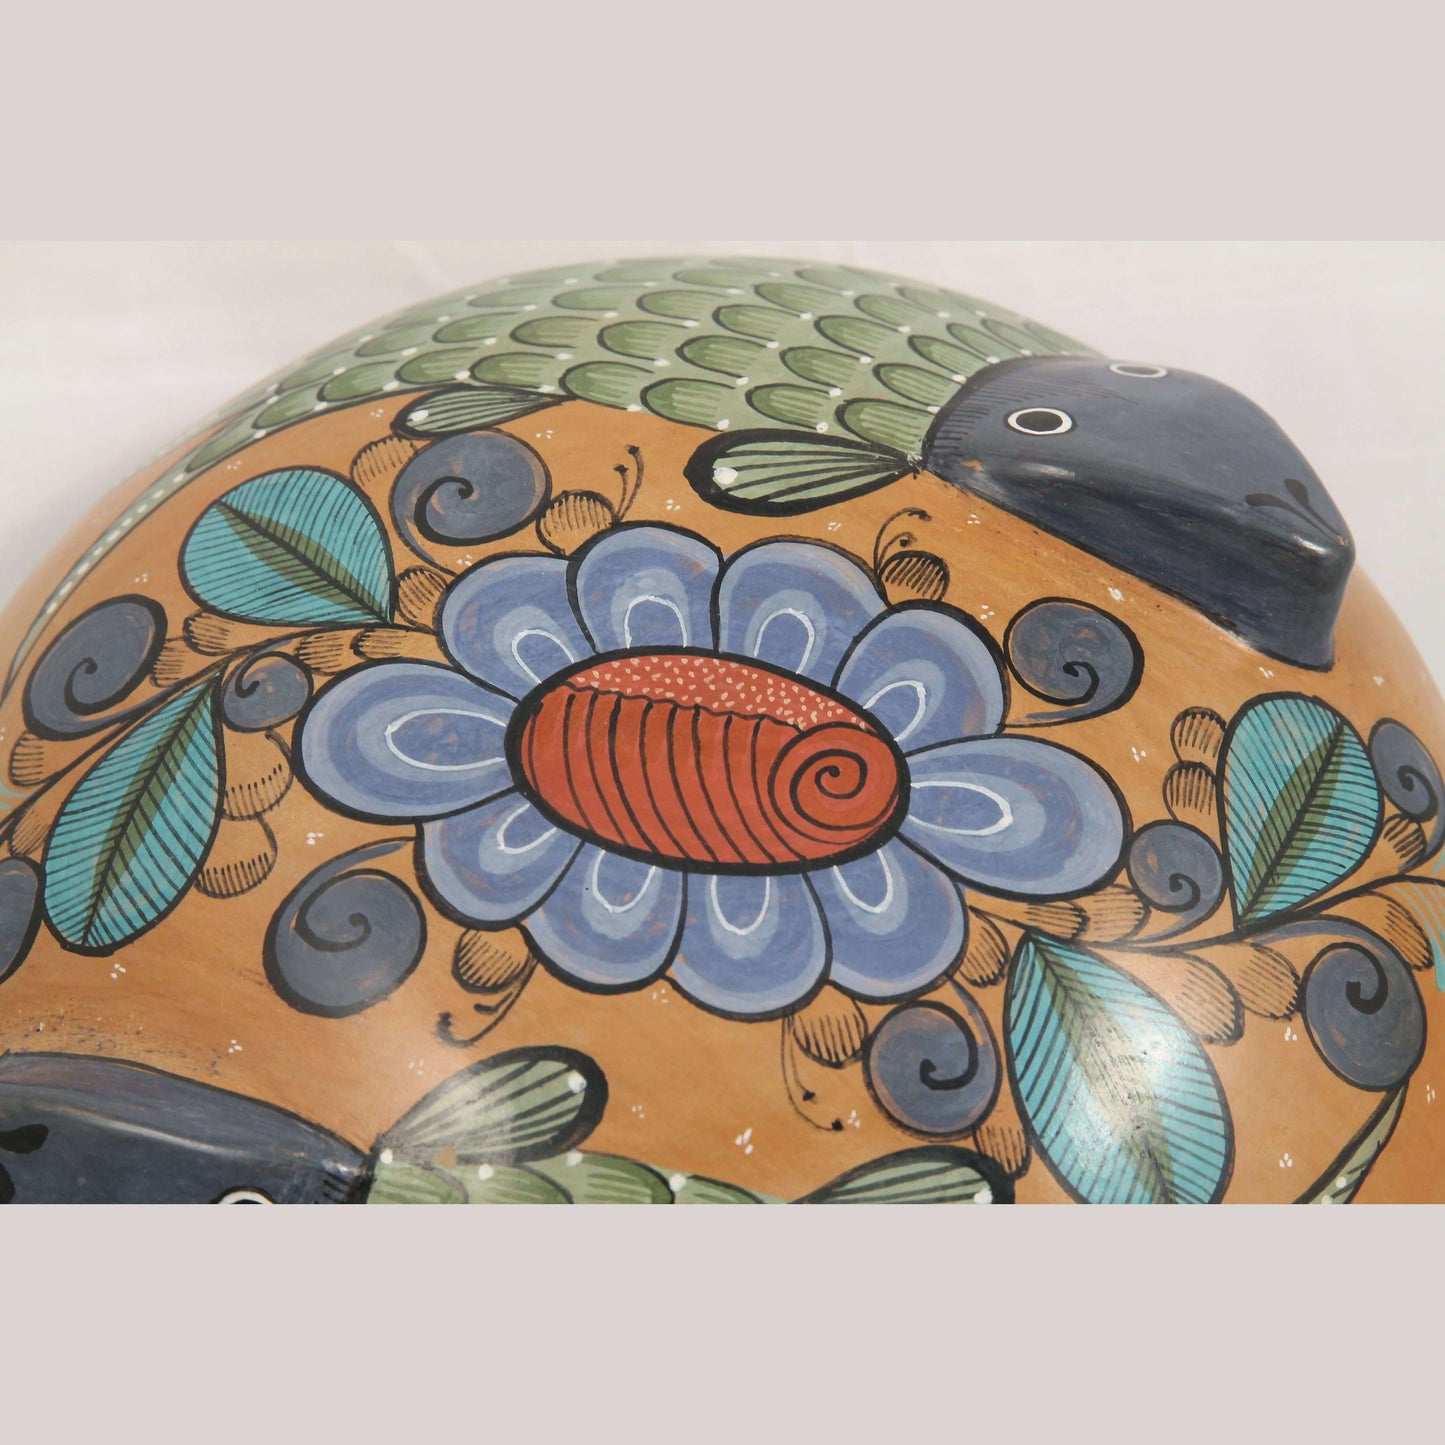 3 Footed Ceramic Vessel Mexico Fine Folk Art Master Jose Luis Cortez Green Fish